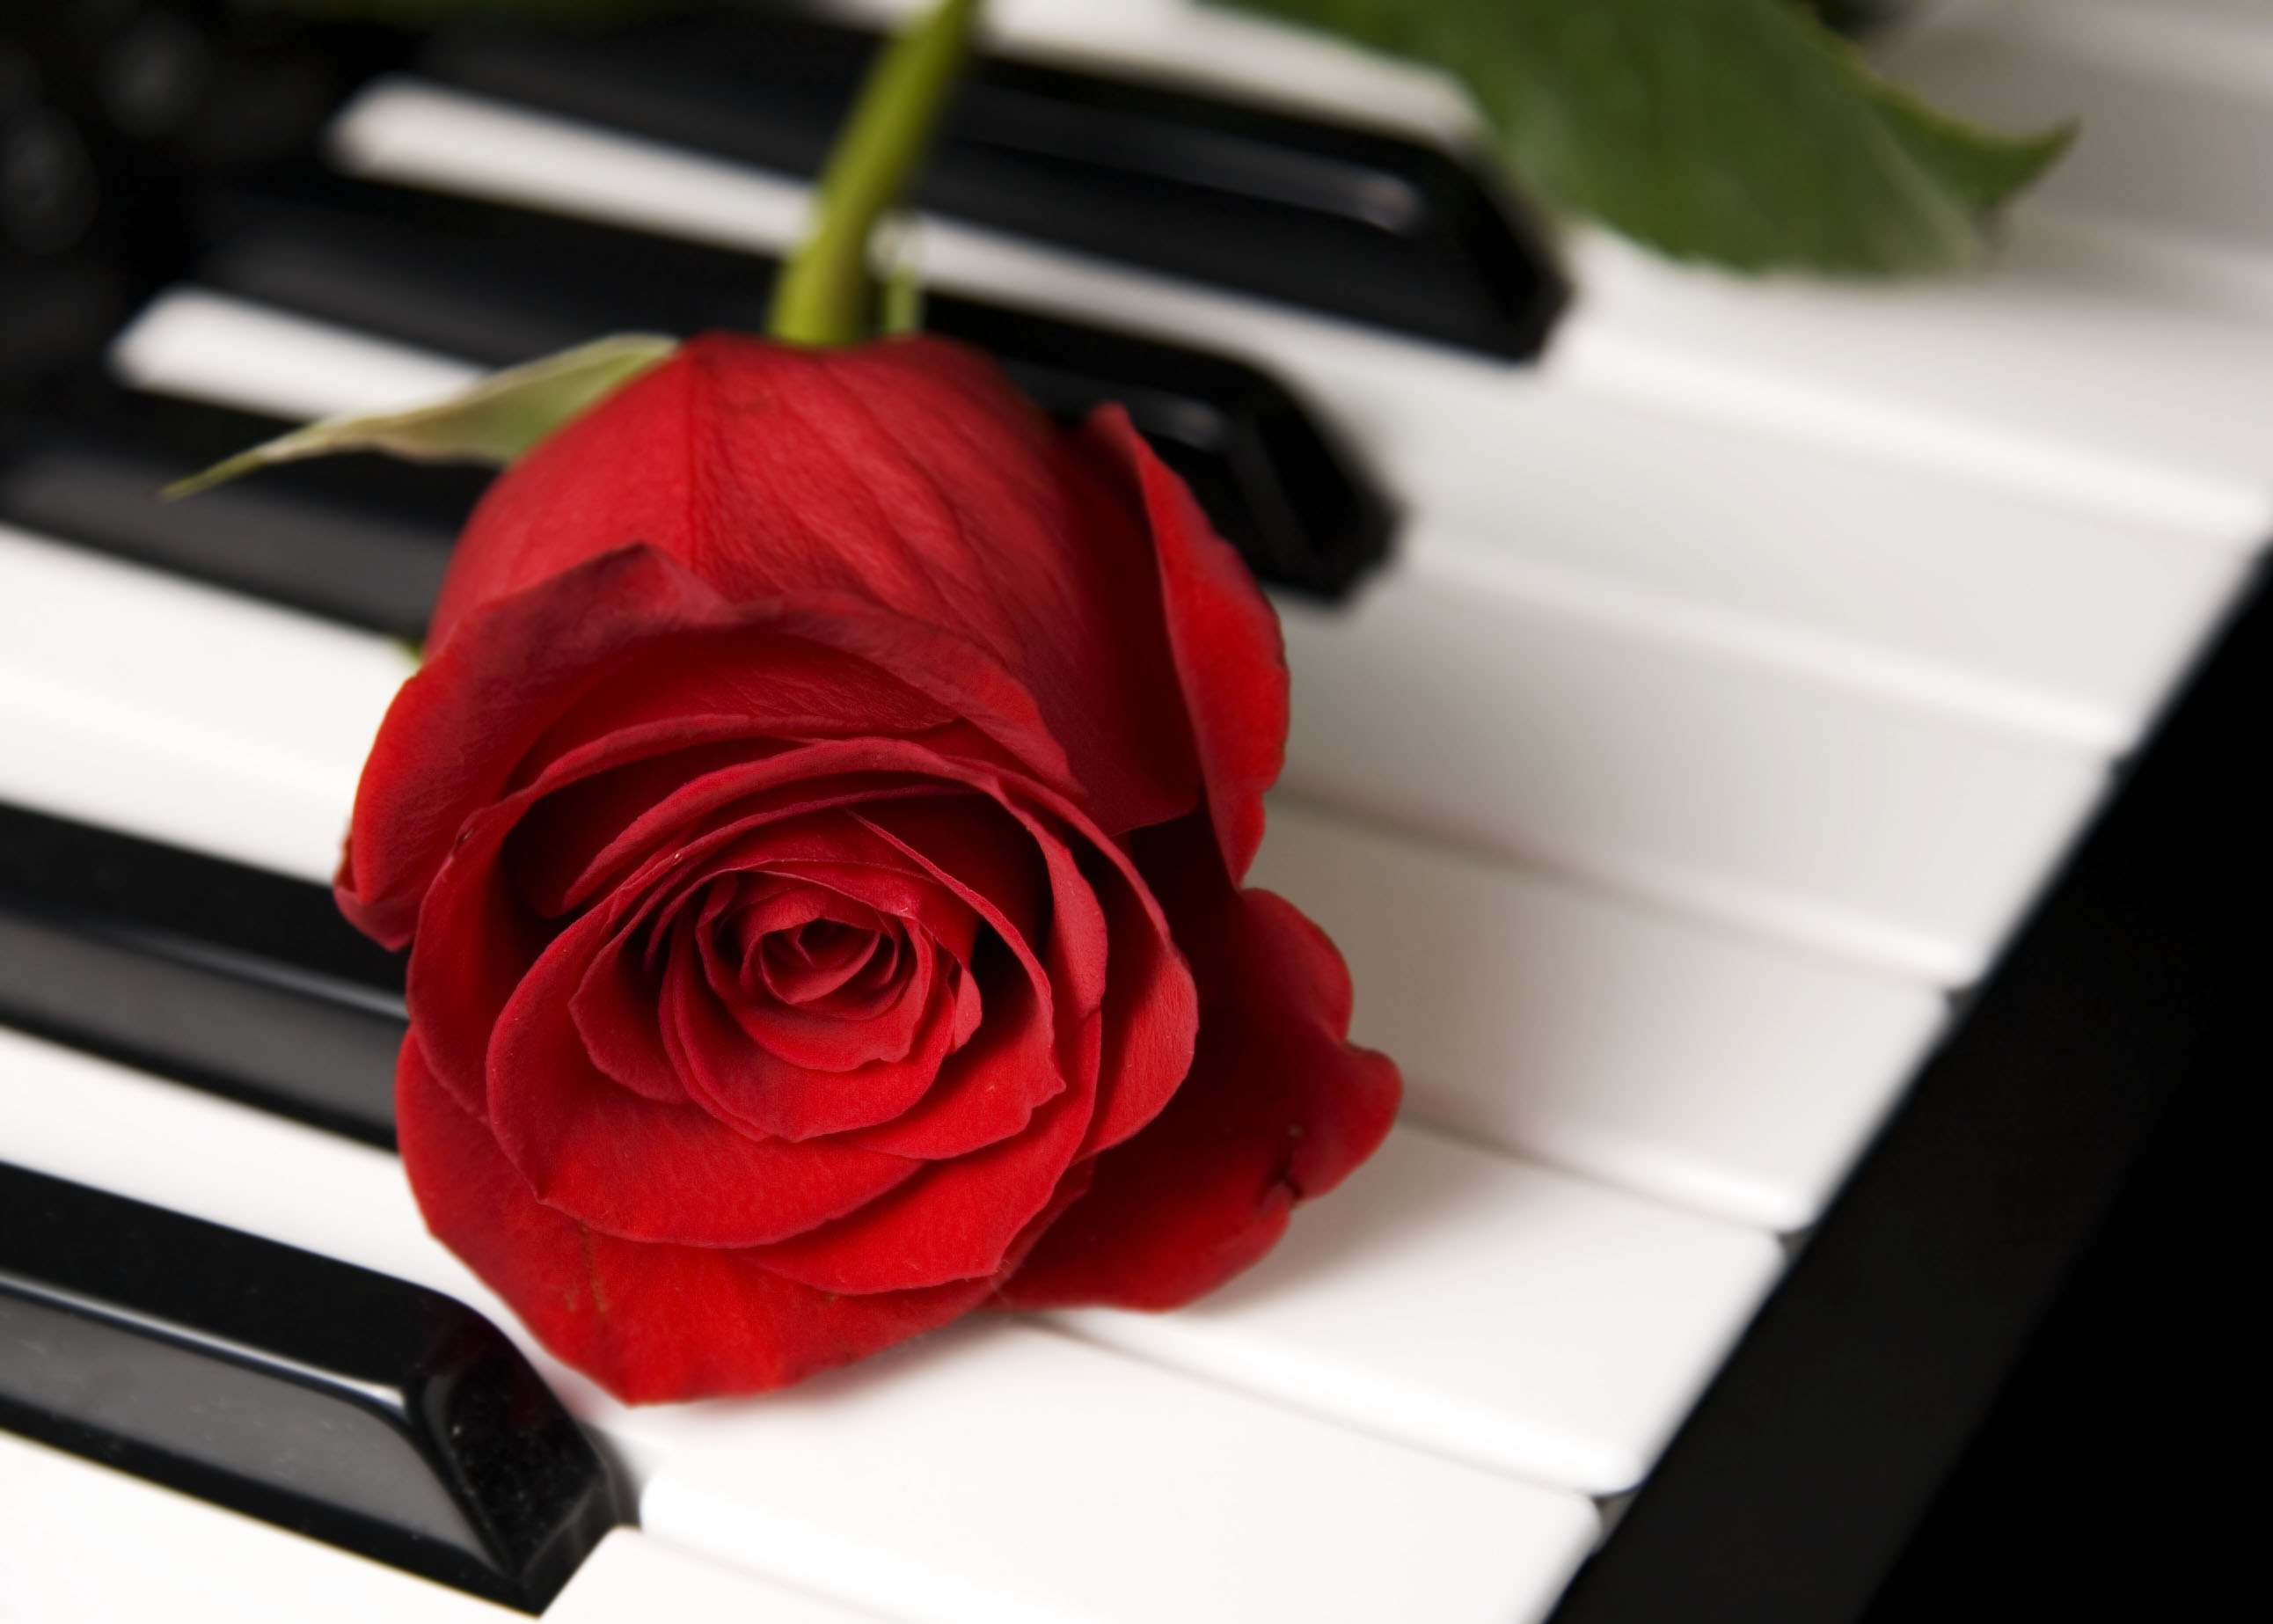 Piano And Rose Quotes. QuotesGram